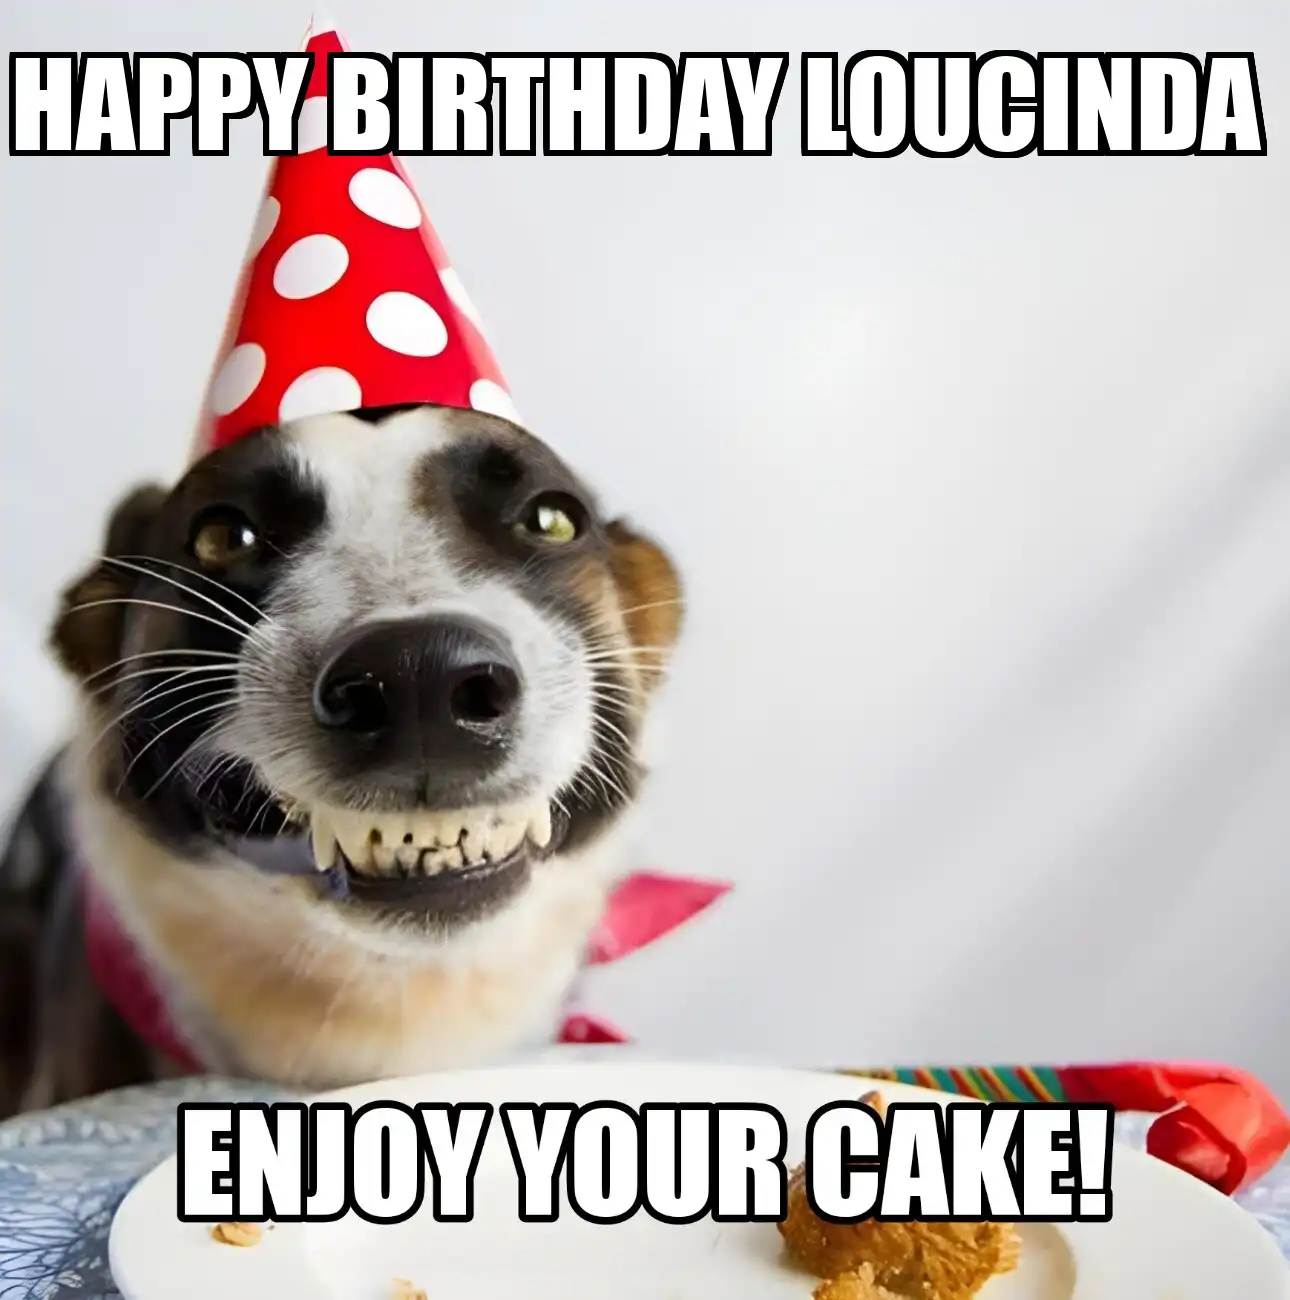 Happy Birthday Loucinda Enjoy Your Cake Dog Meme